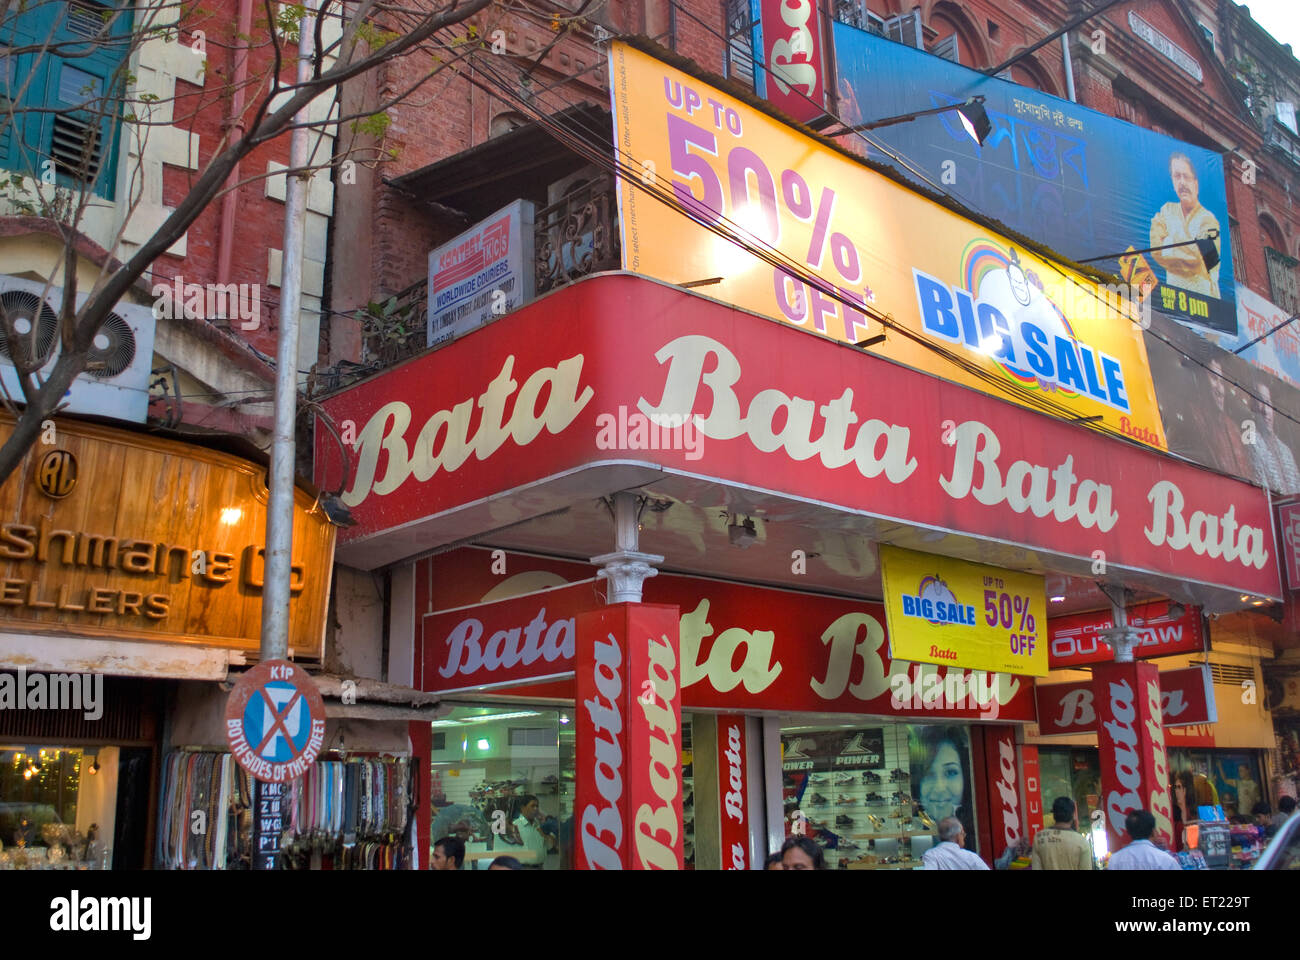 bata showroom in electronic city